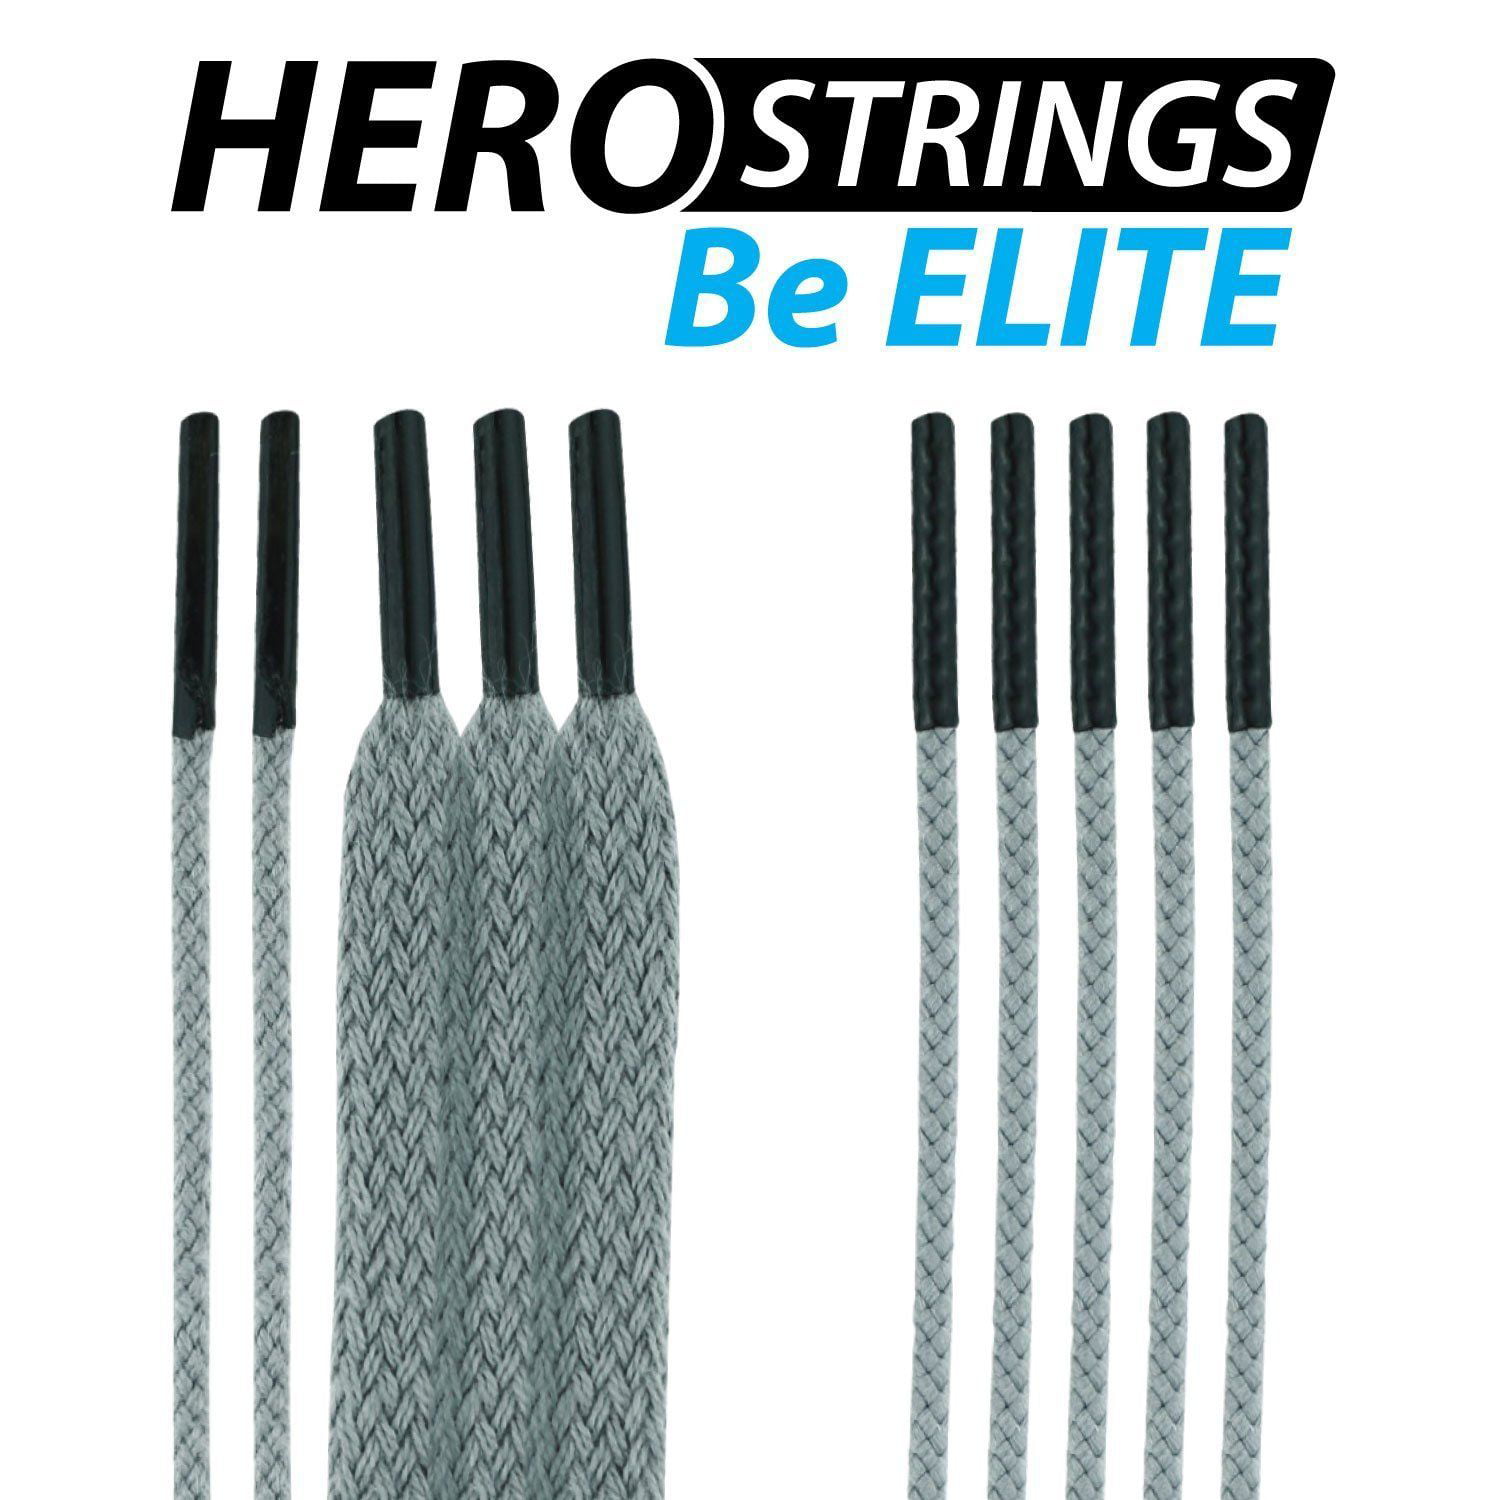 East Coast Dyes Lacrosse HeroStrings Pro Stringing Kit Assorted Colors 